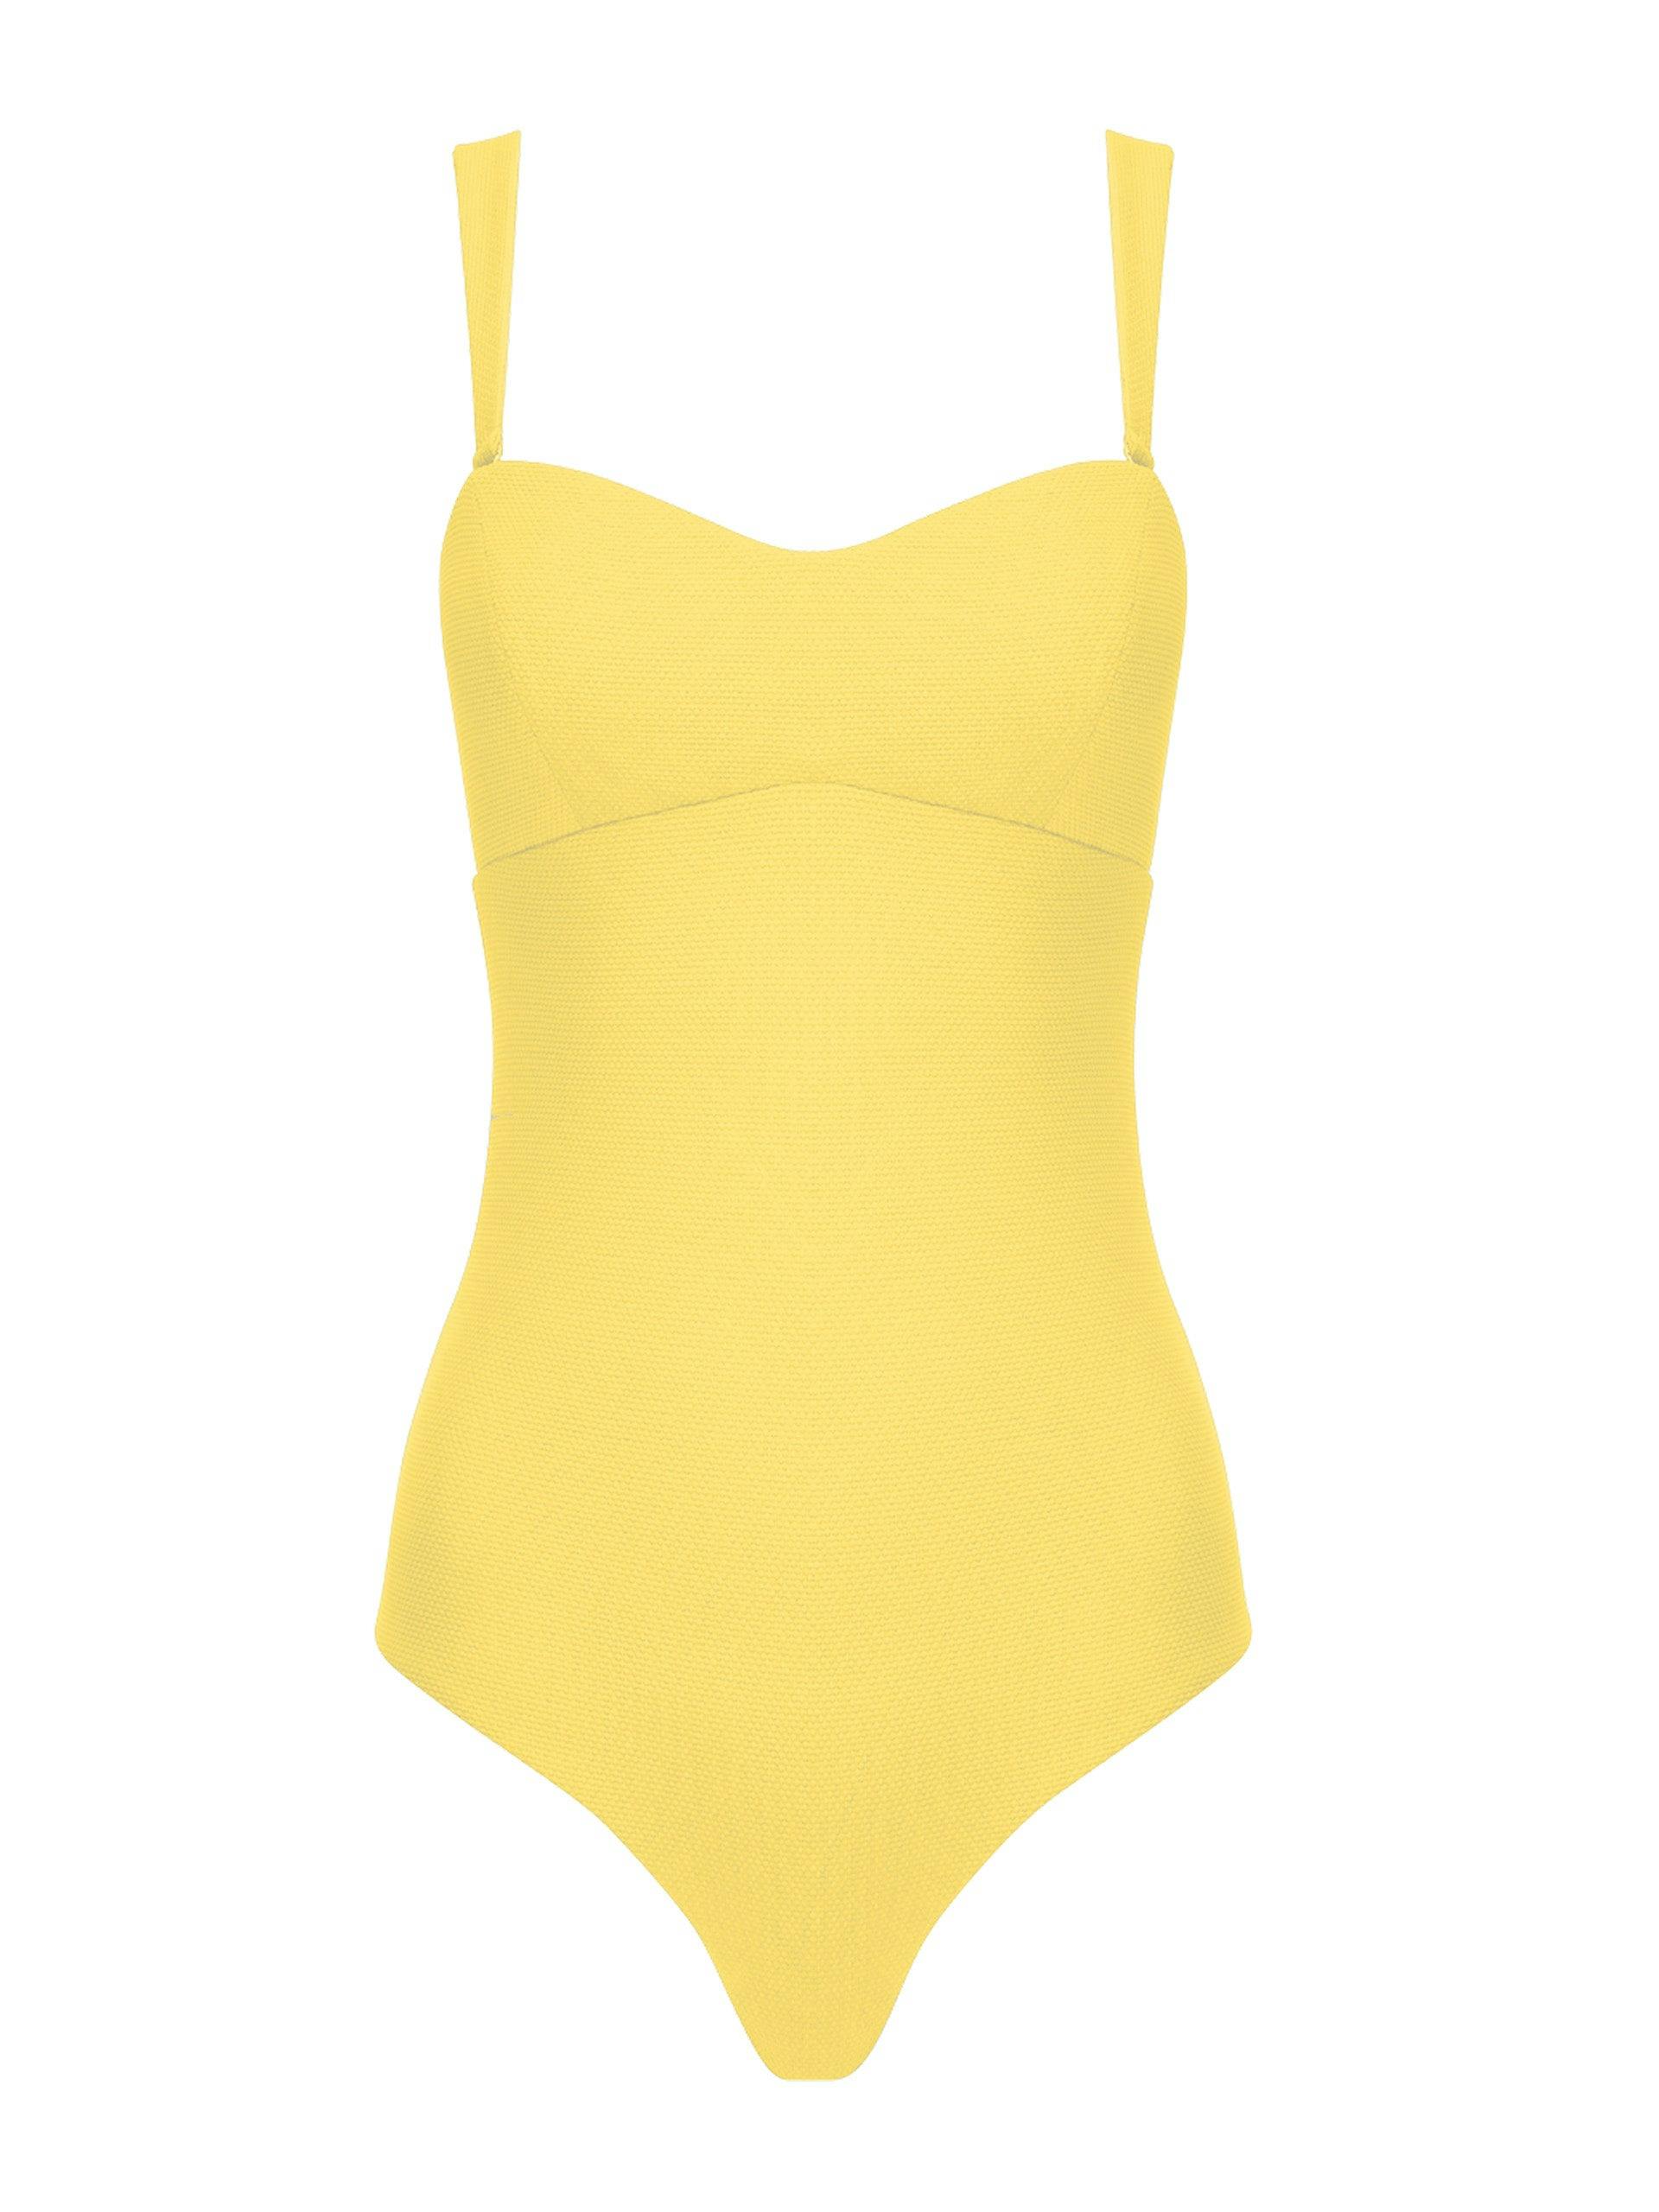 Citron yellow Laura bandeau swimsuit